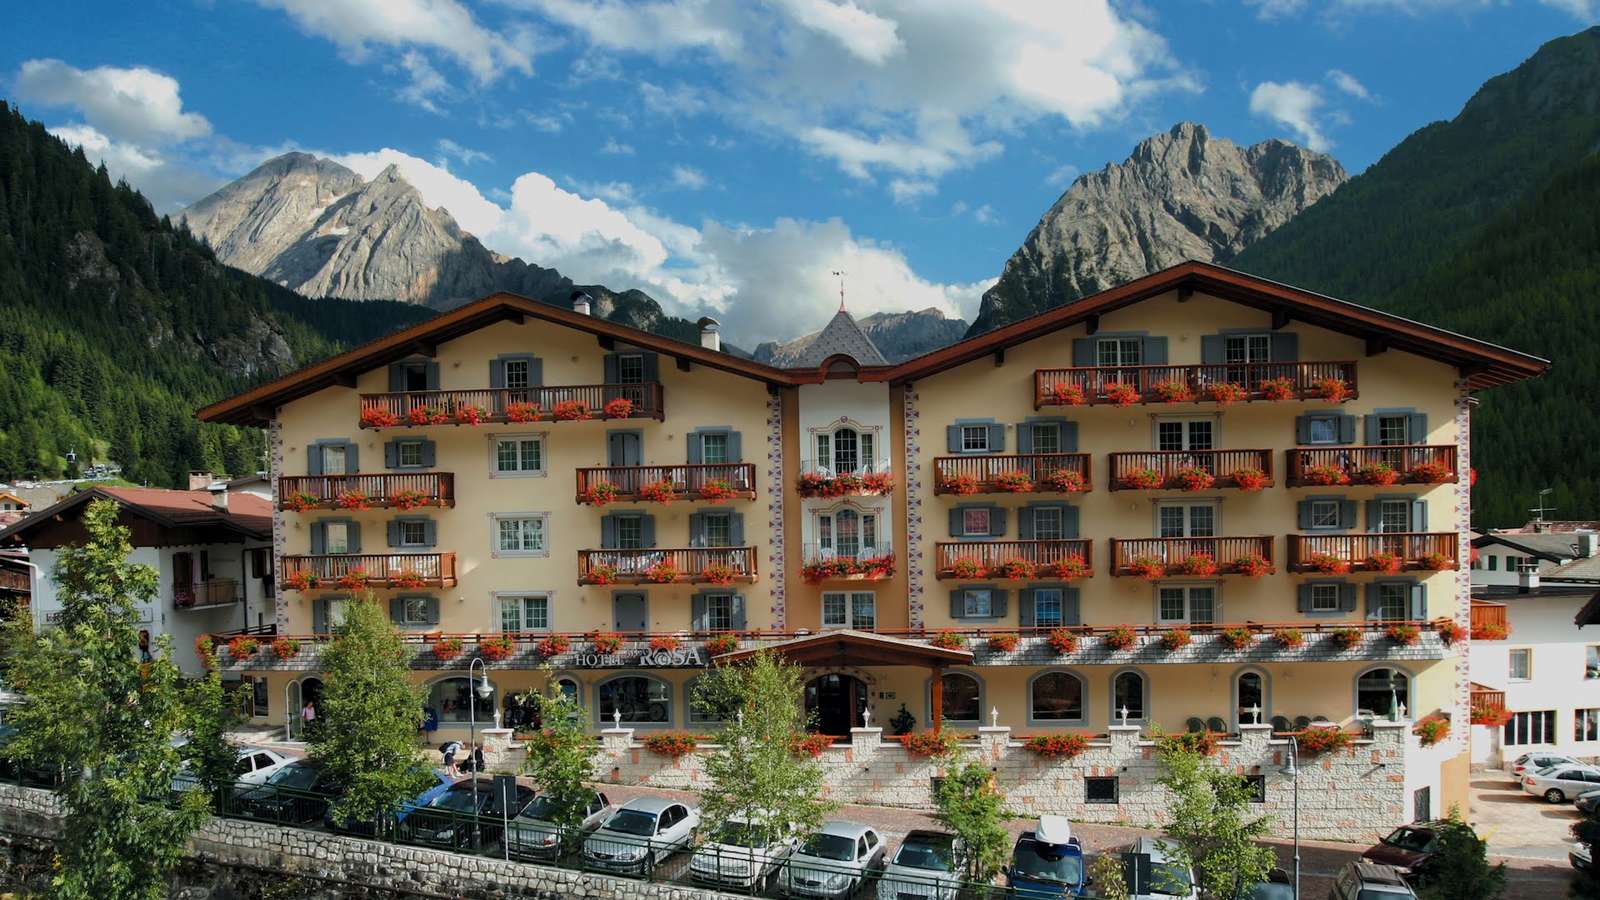 Dolomites - Canazei, Italy online puzzle